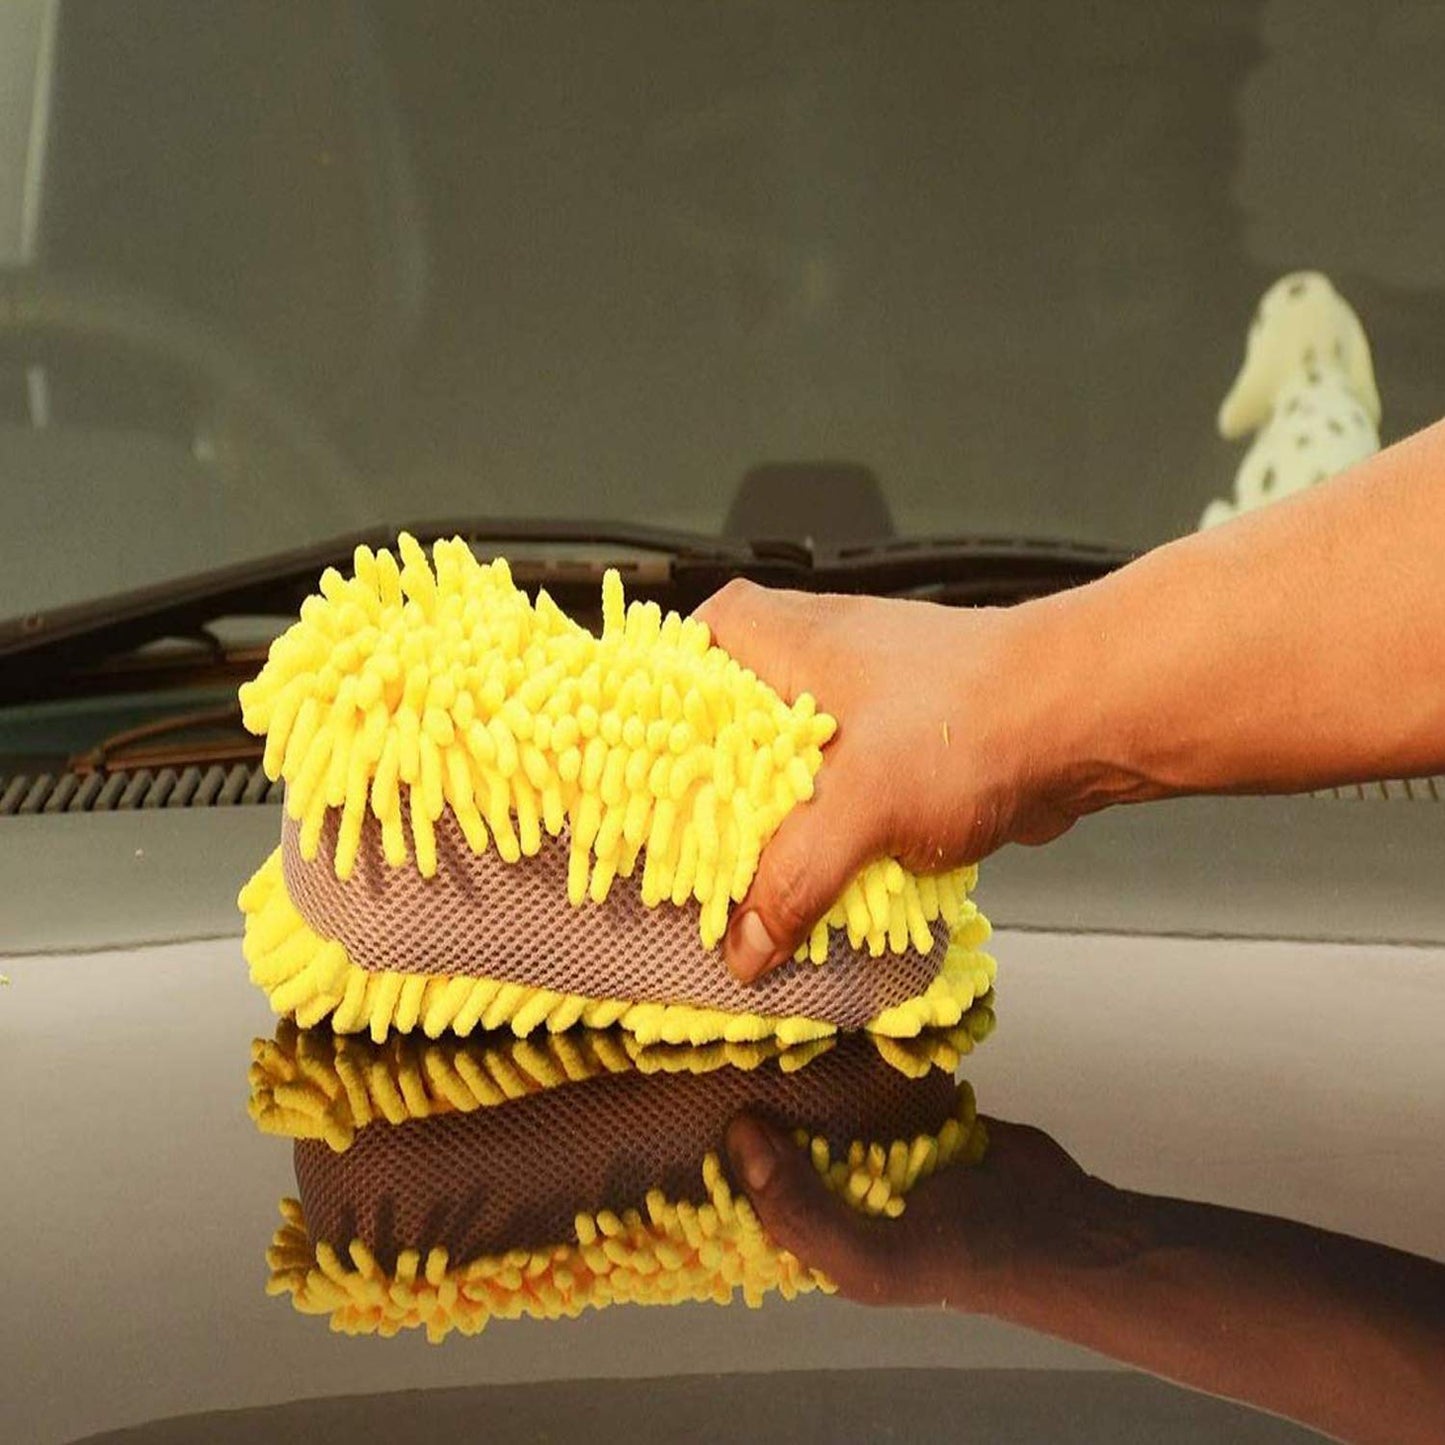 CAR SAAZ® Super Large Microfiber Sponge Sandwich Design